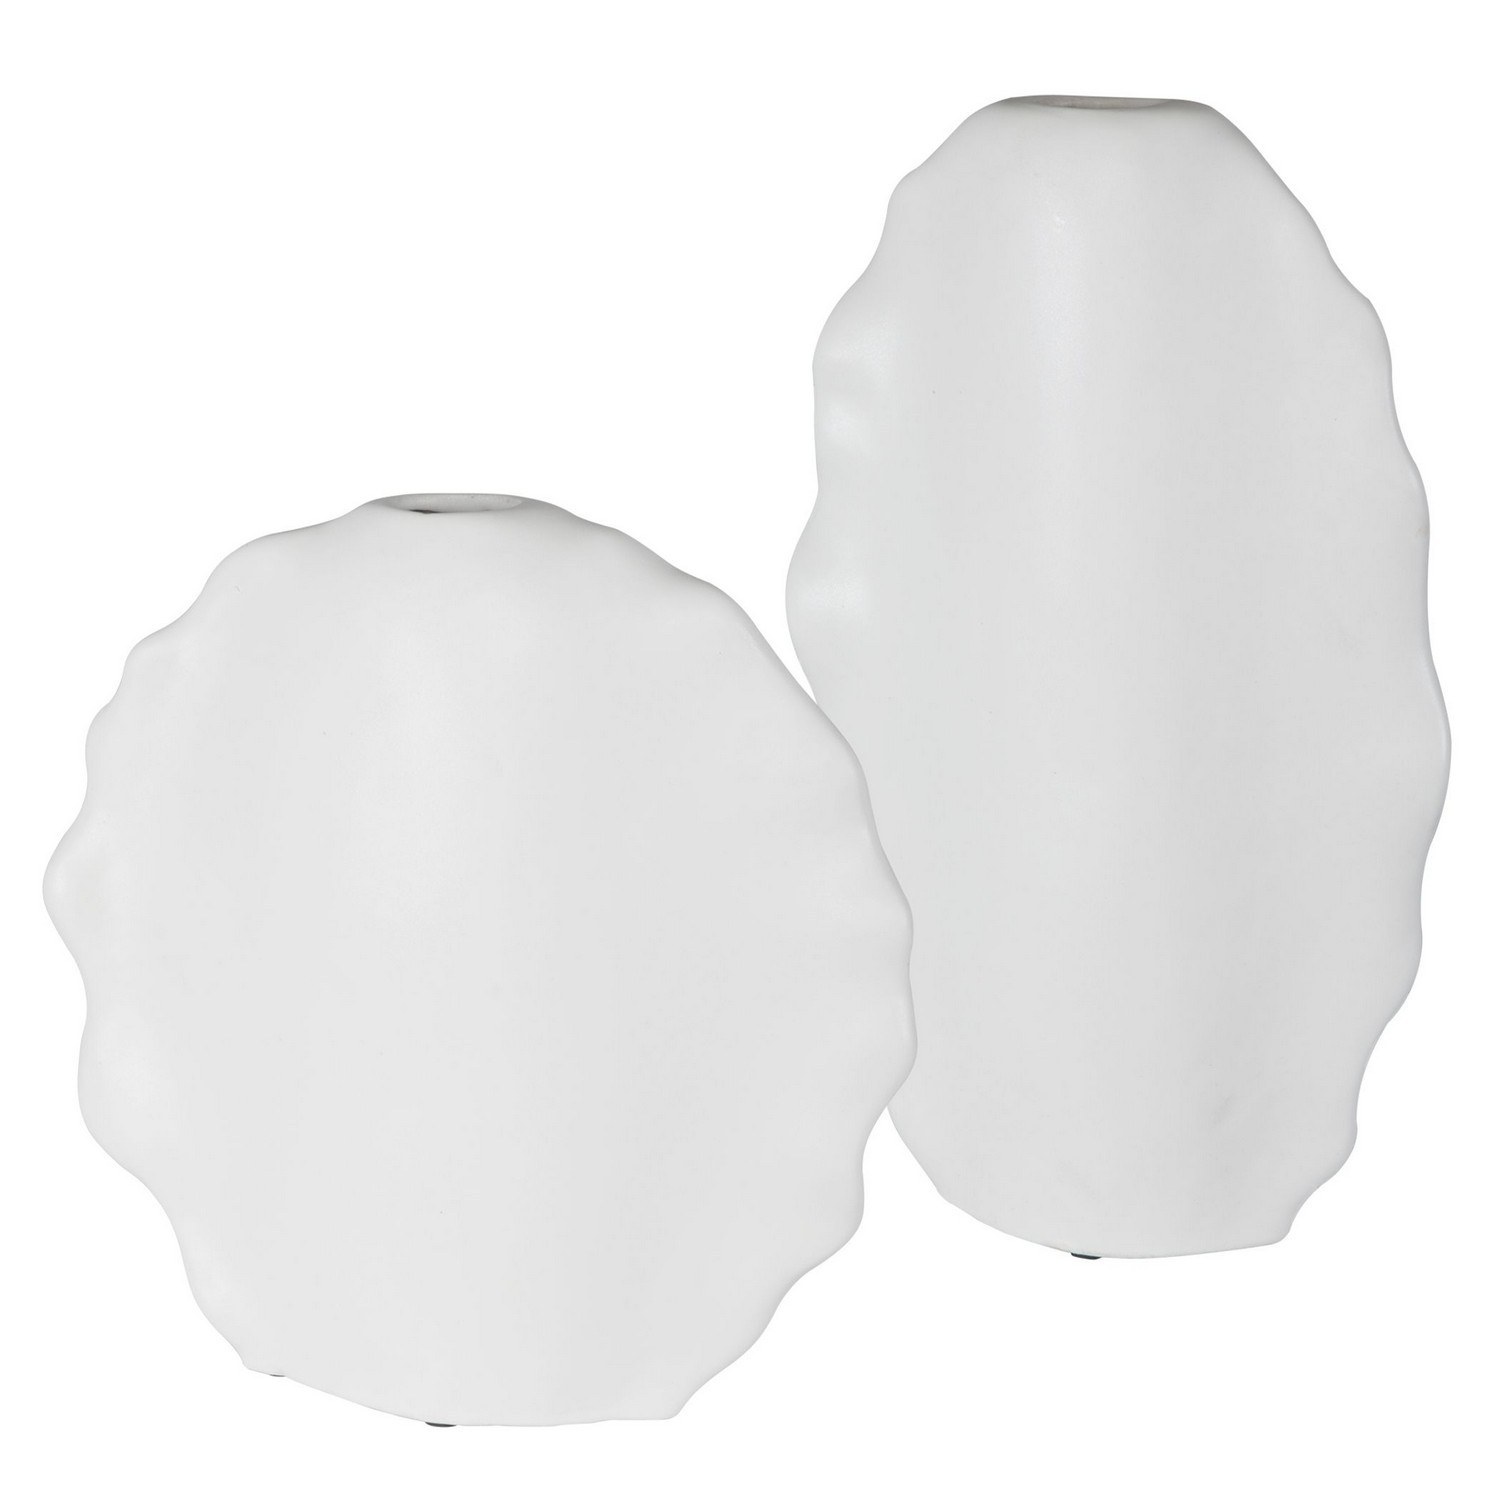 Uttermost Ruffled Feathers Modern Vases - Set of 2 - White